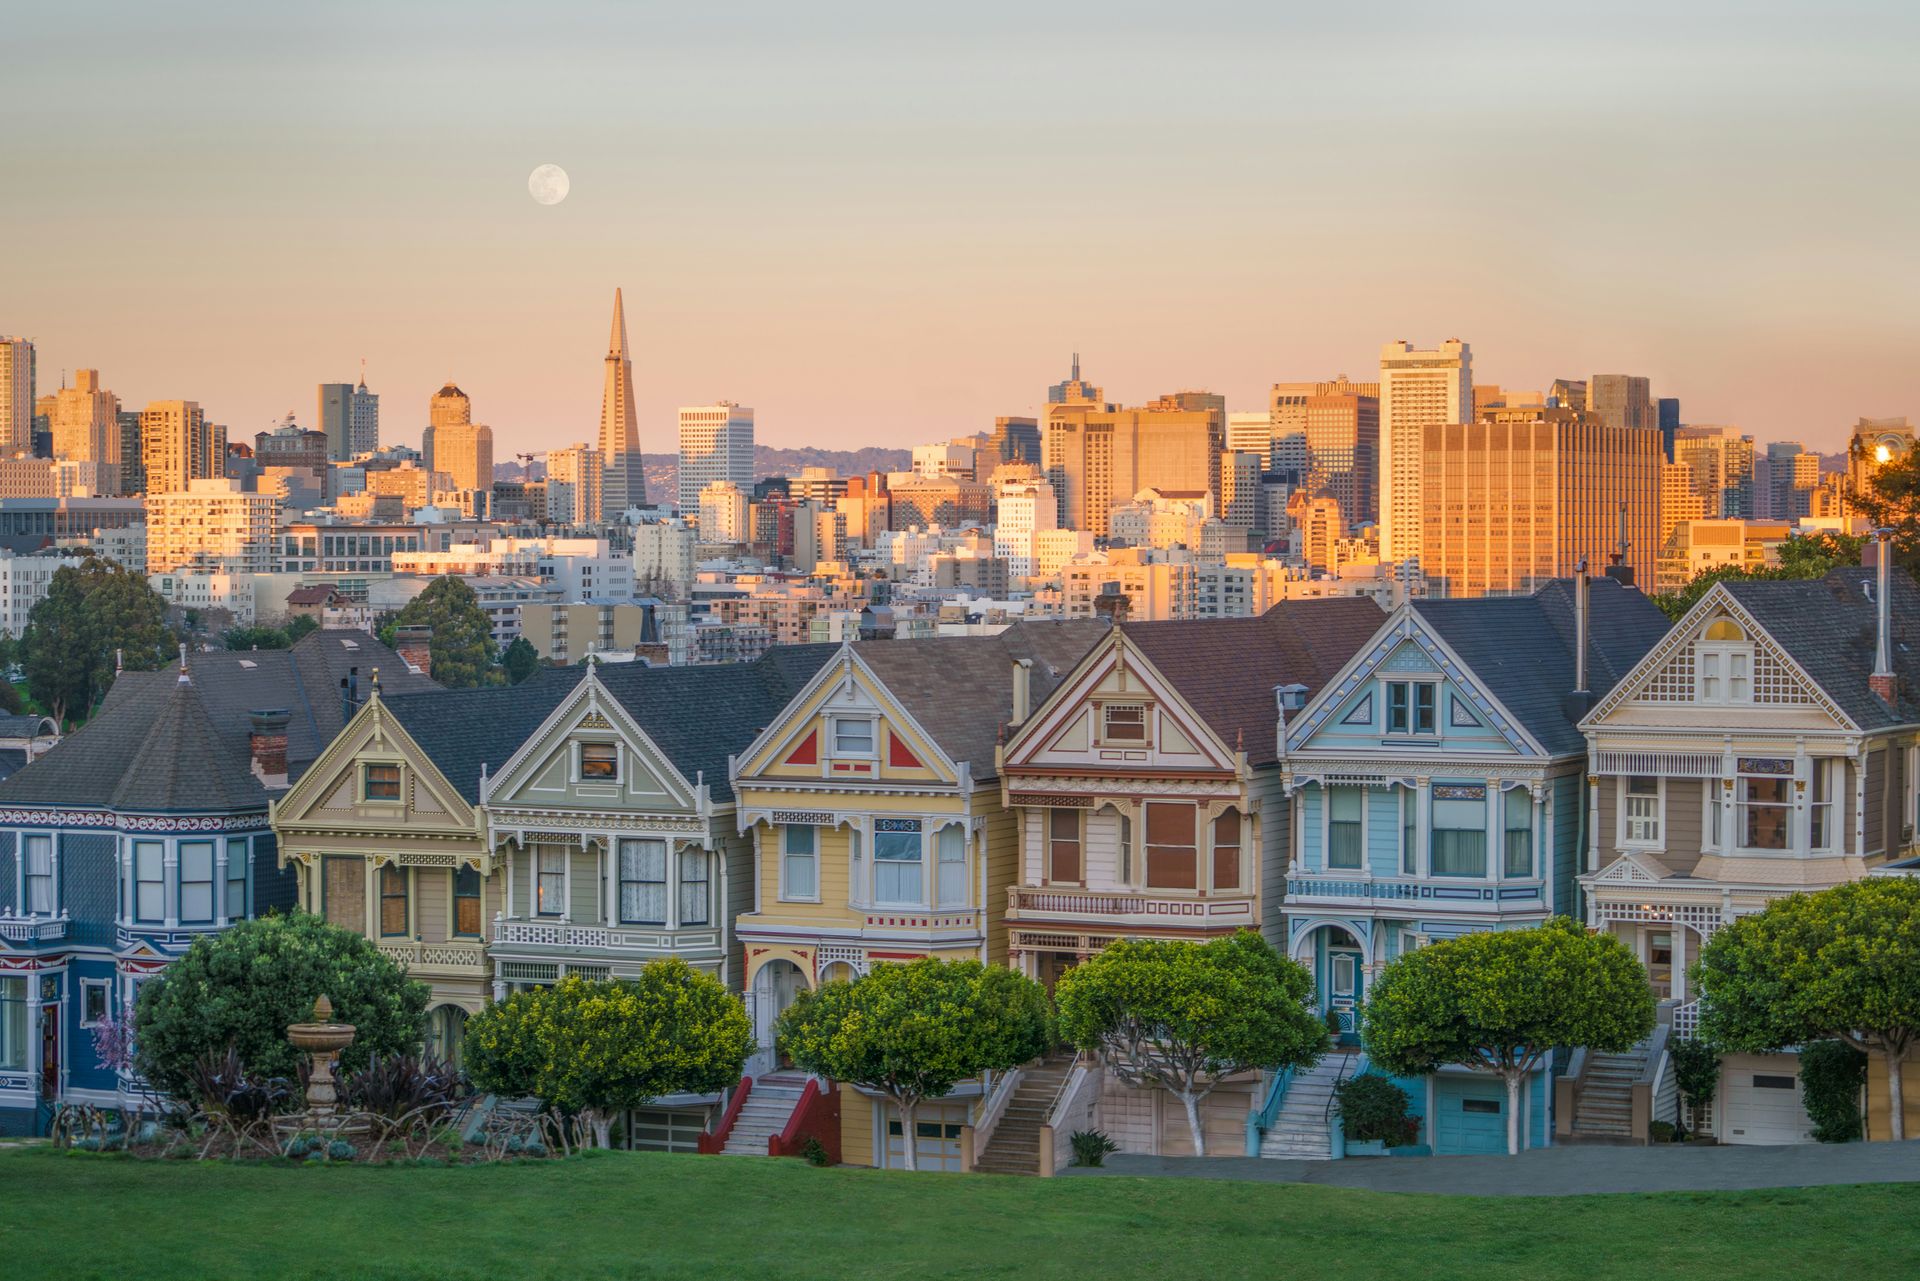  3# San Francisco (276,400 millionaires)